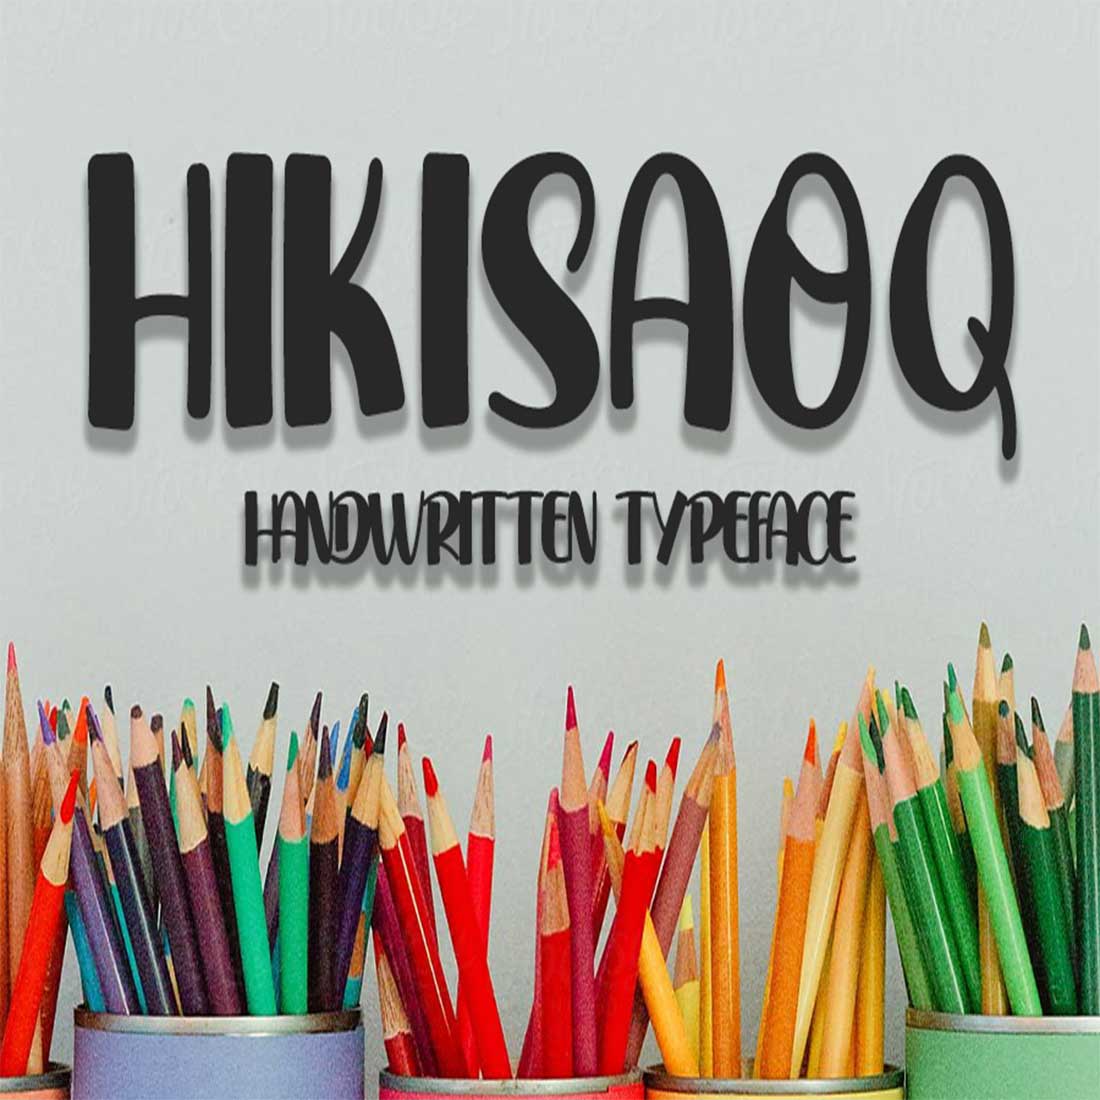 Hikisaoq cover image.